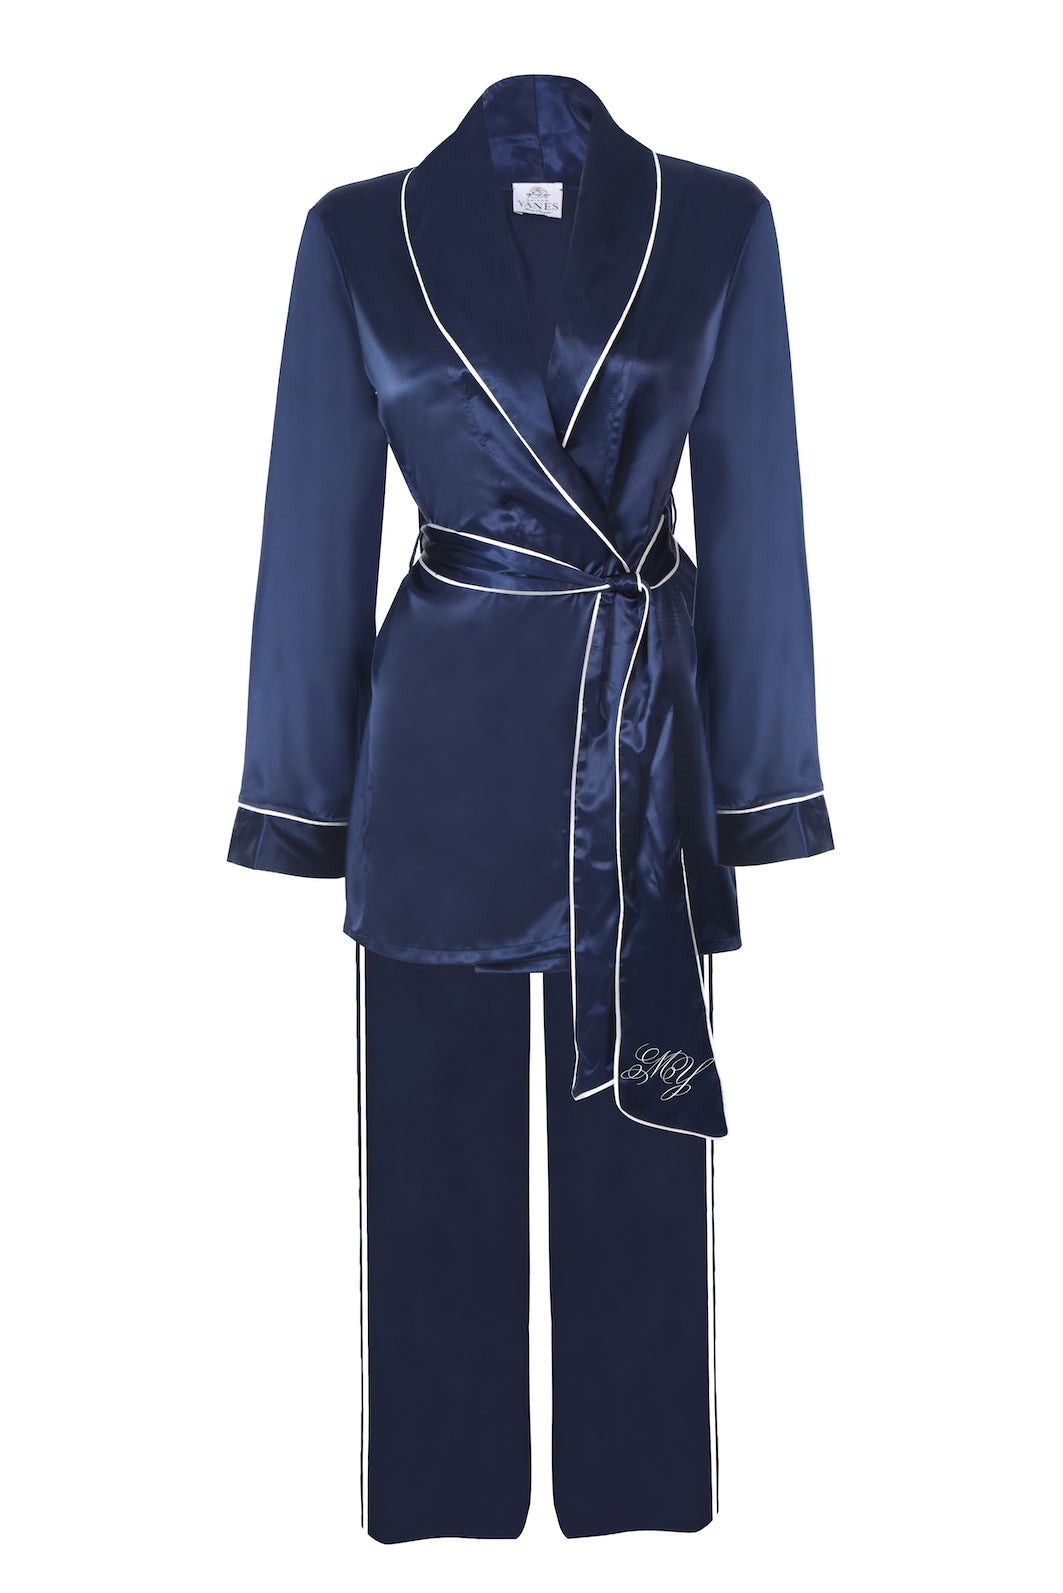 "Mom & Bride to be" Koleksiyonu Özel Lacivert Set Pijama Takımı